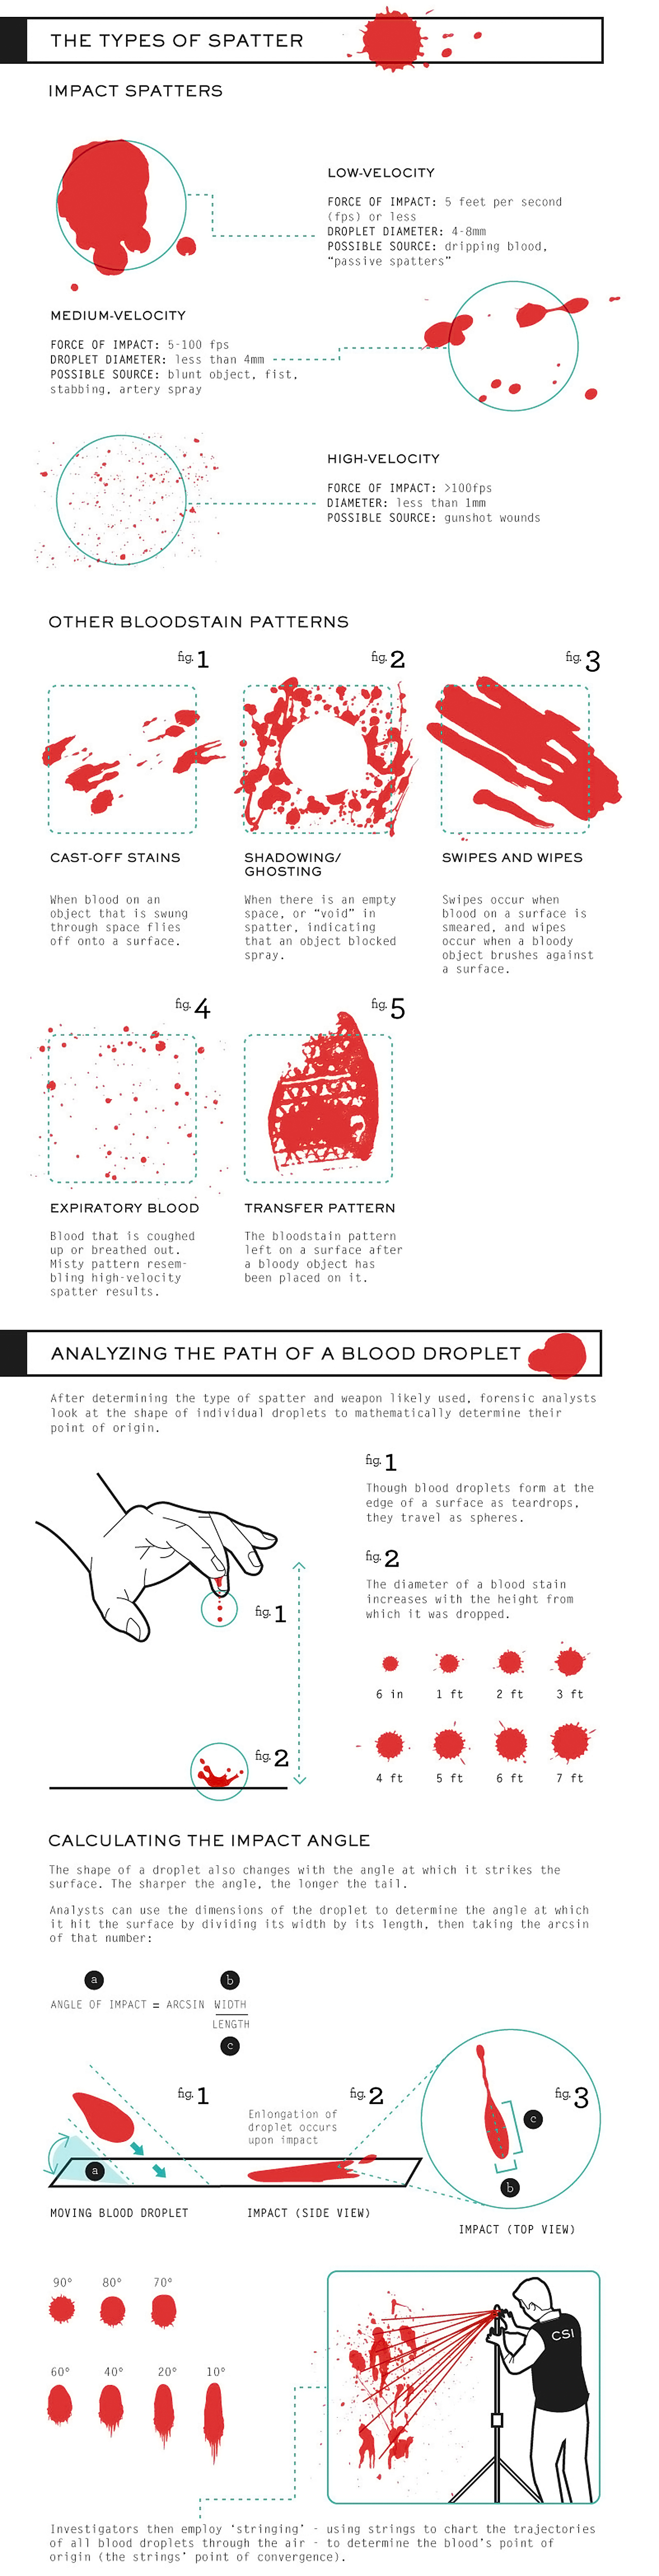 Bloodstain Pattern Analysis 2